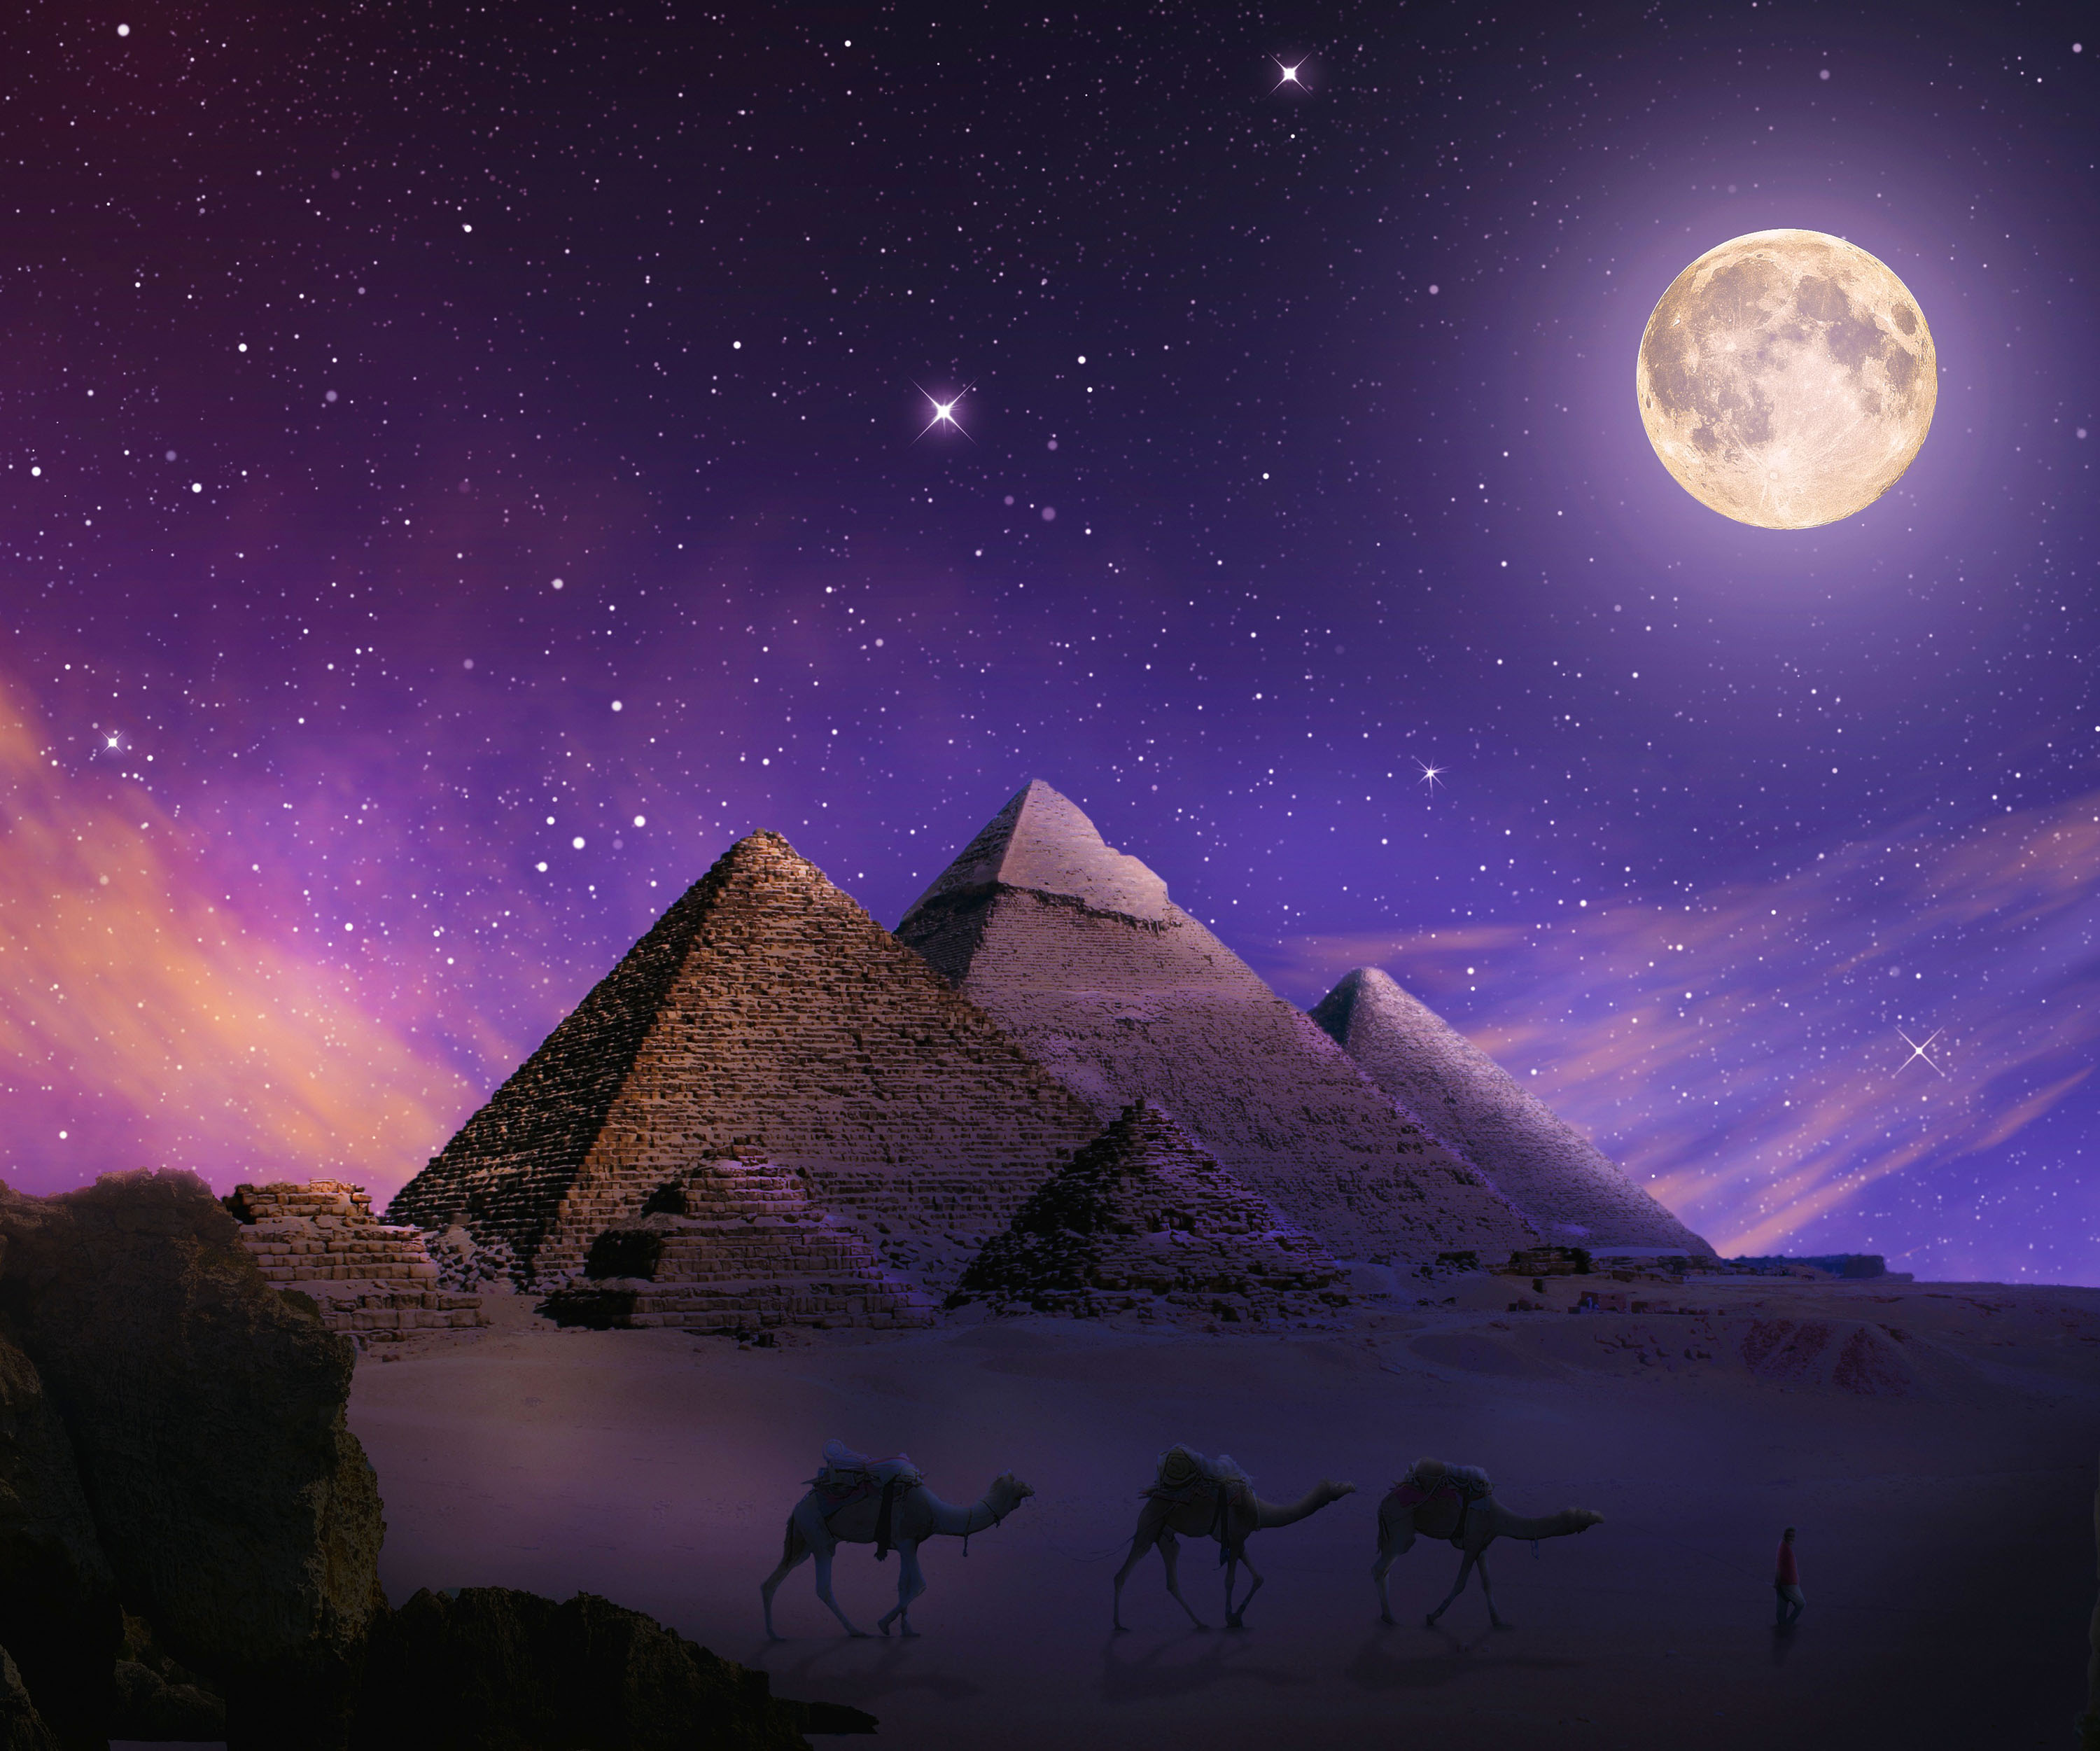 camel, egypt, pyramid, man made